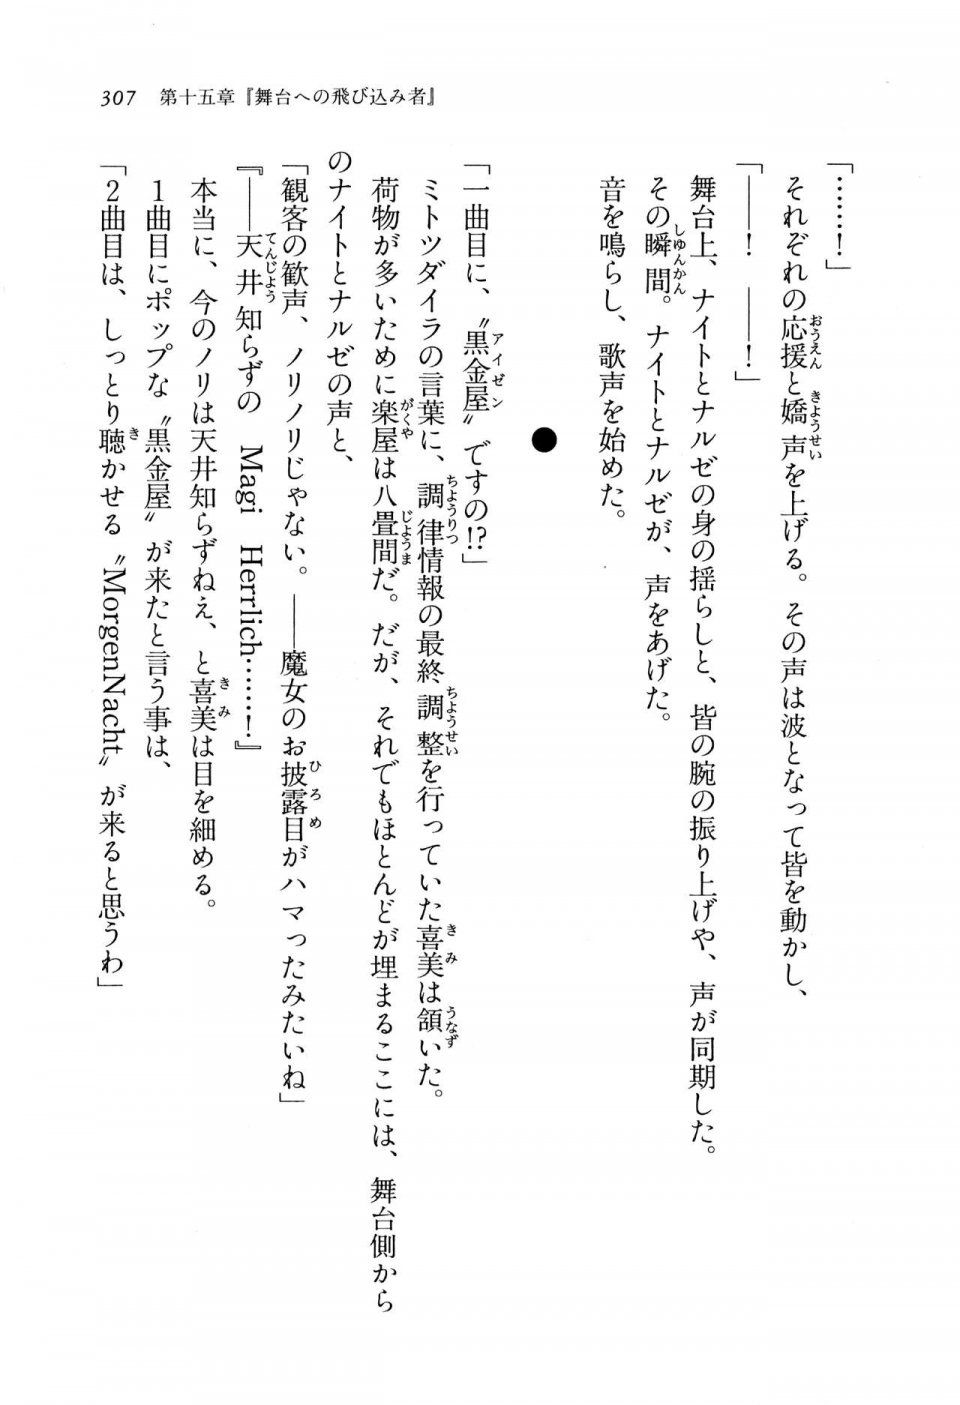 Kyoukai Senjou no Horizon BD Special Mininovel Vol 8(4B) - Photo #311